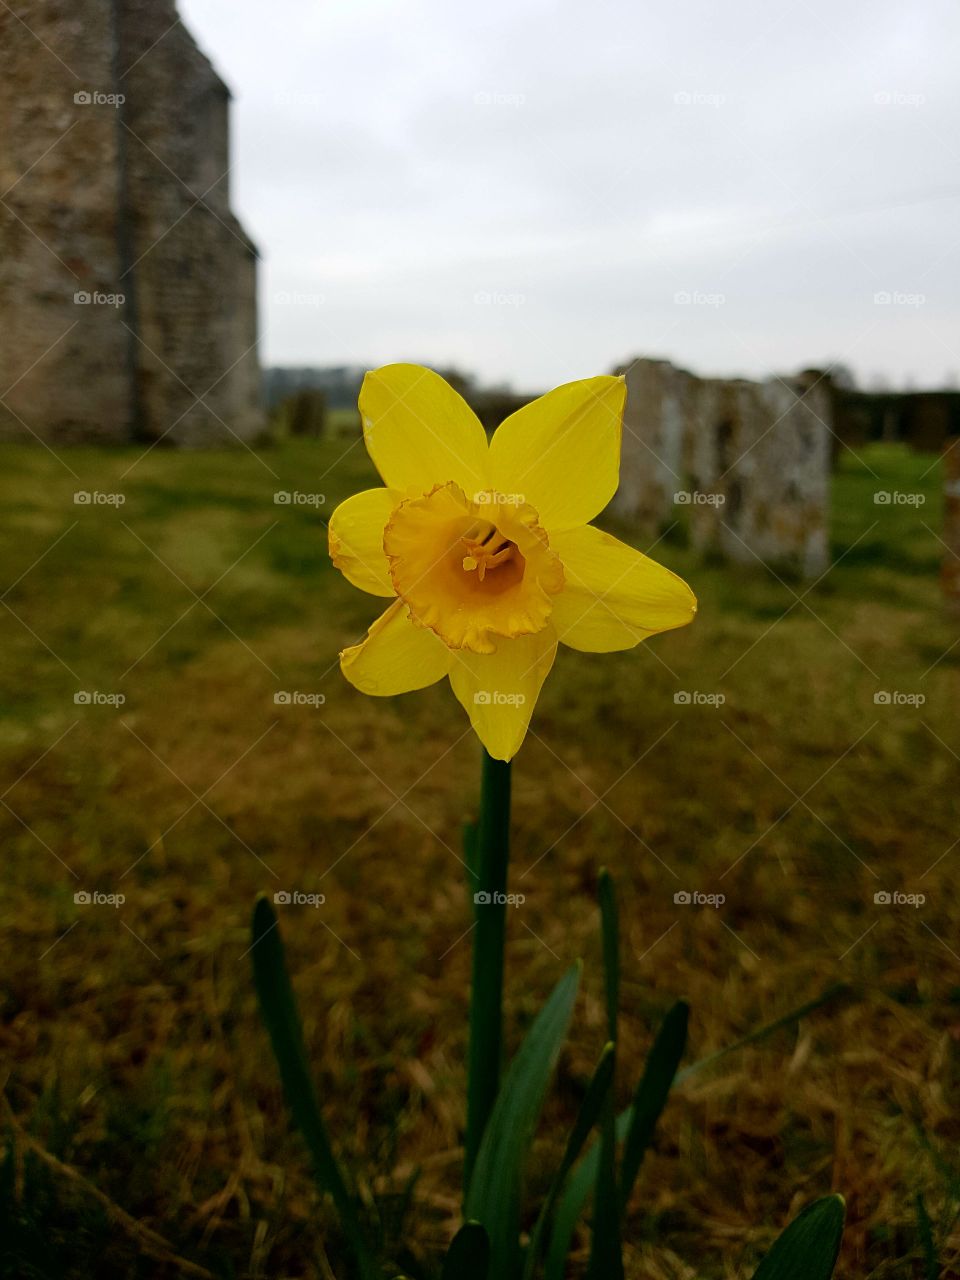 Lonely daffodil